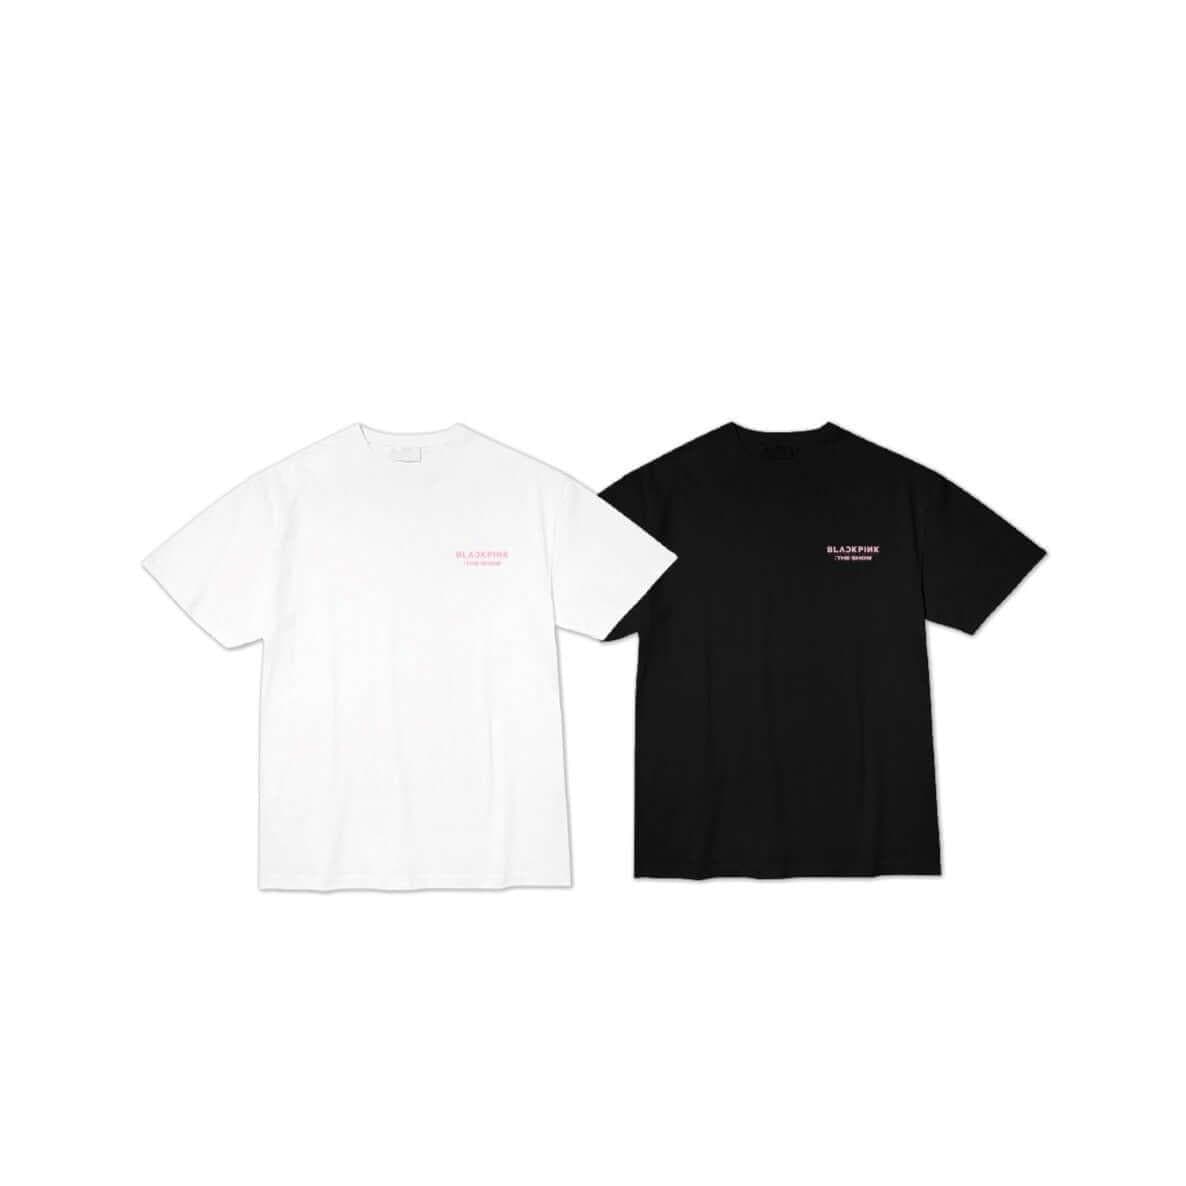 BLACKPINK [THESHOW] T-Shirt Type 1 - Daebak